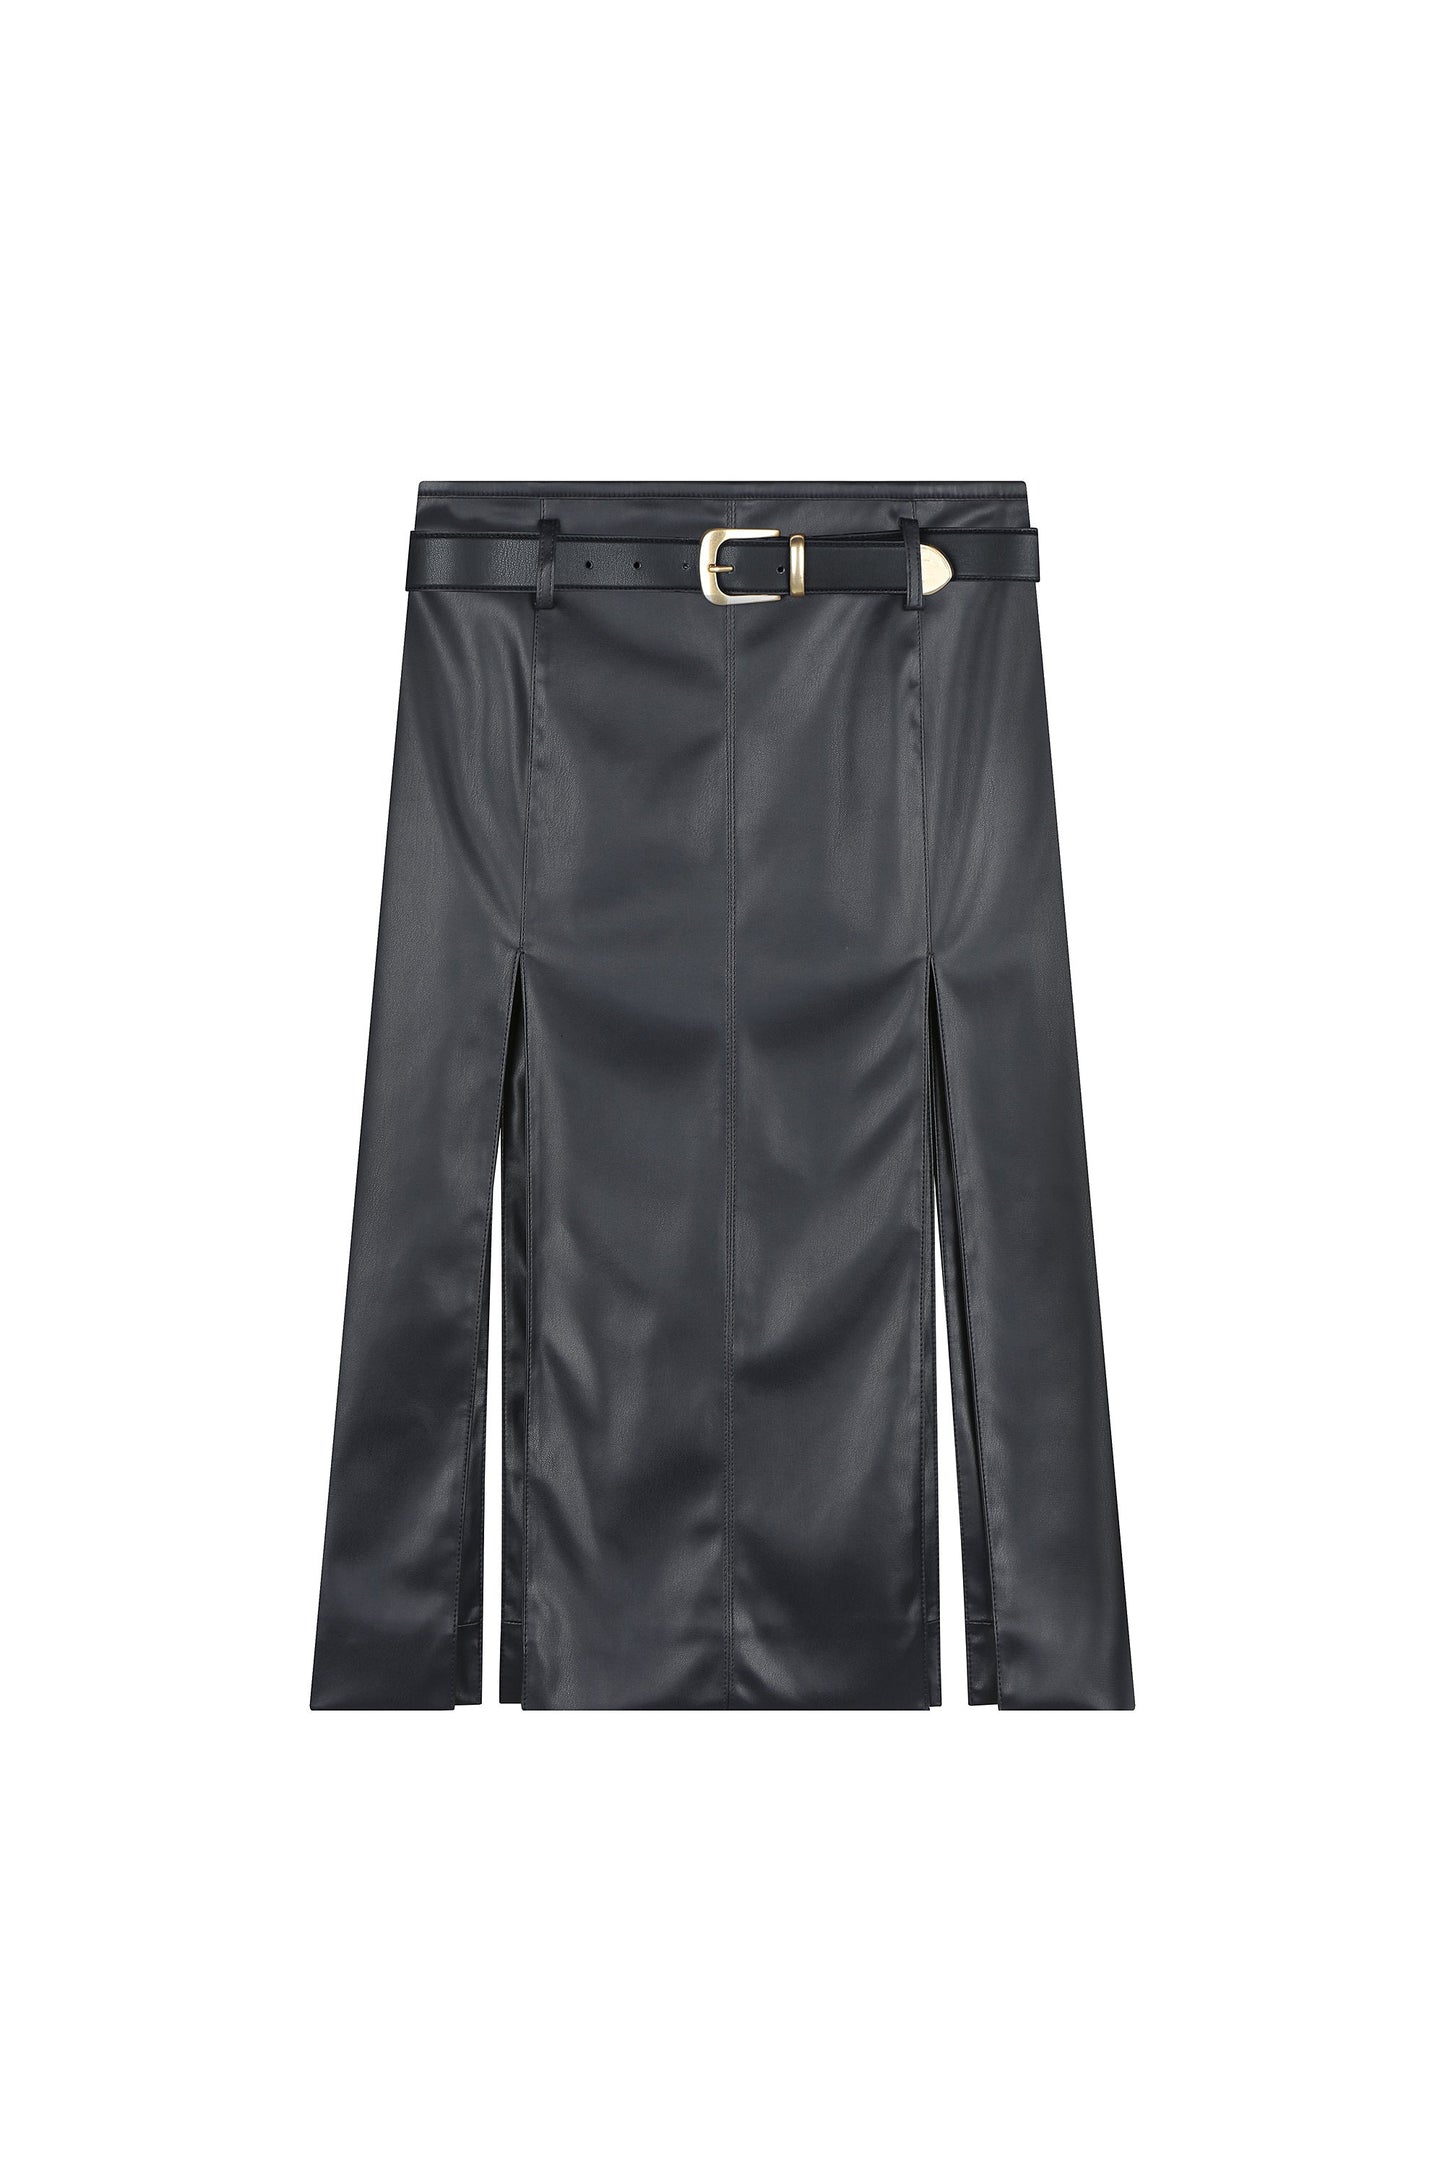 Deep Slit Mid-Length Leather Skirt With Belt